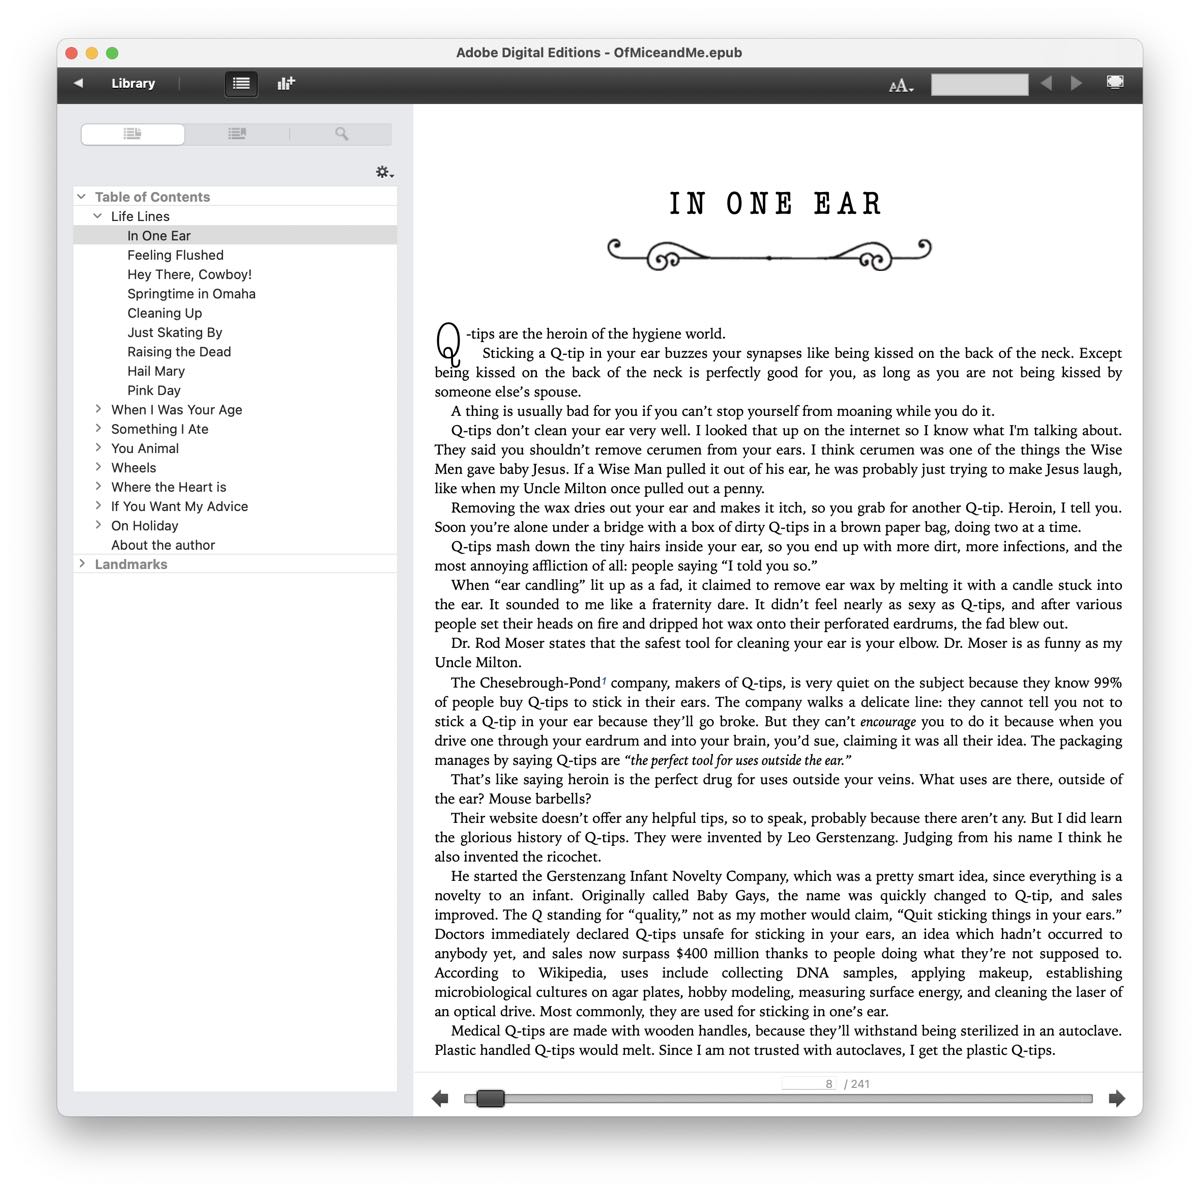 Book sample viewed on Adobe Digital Editions